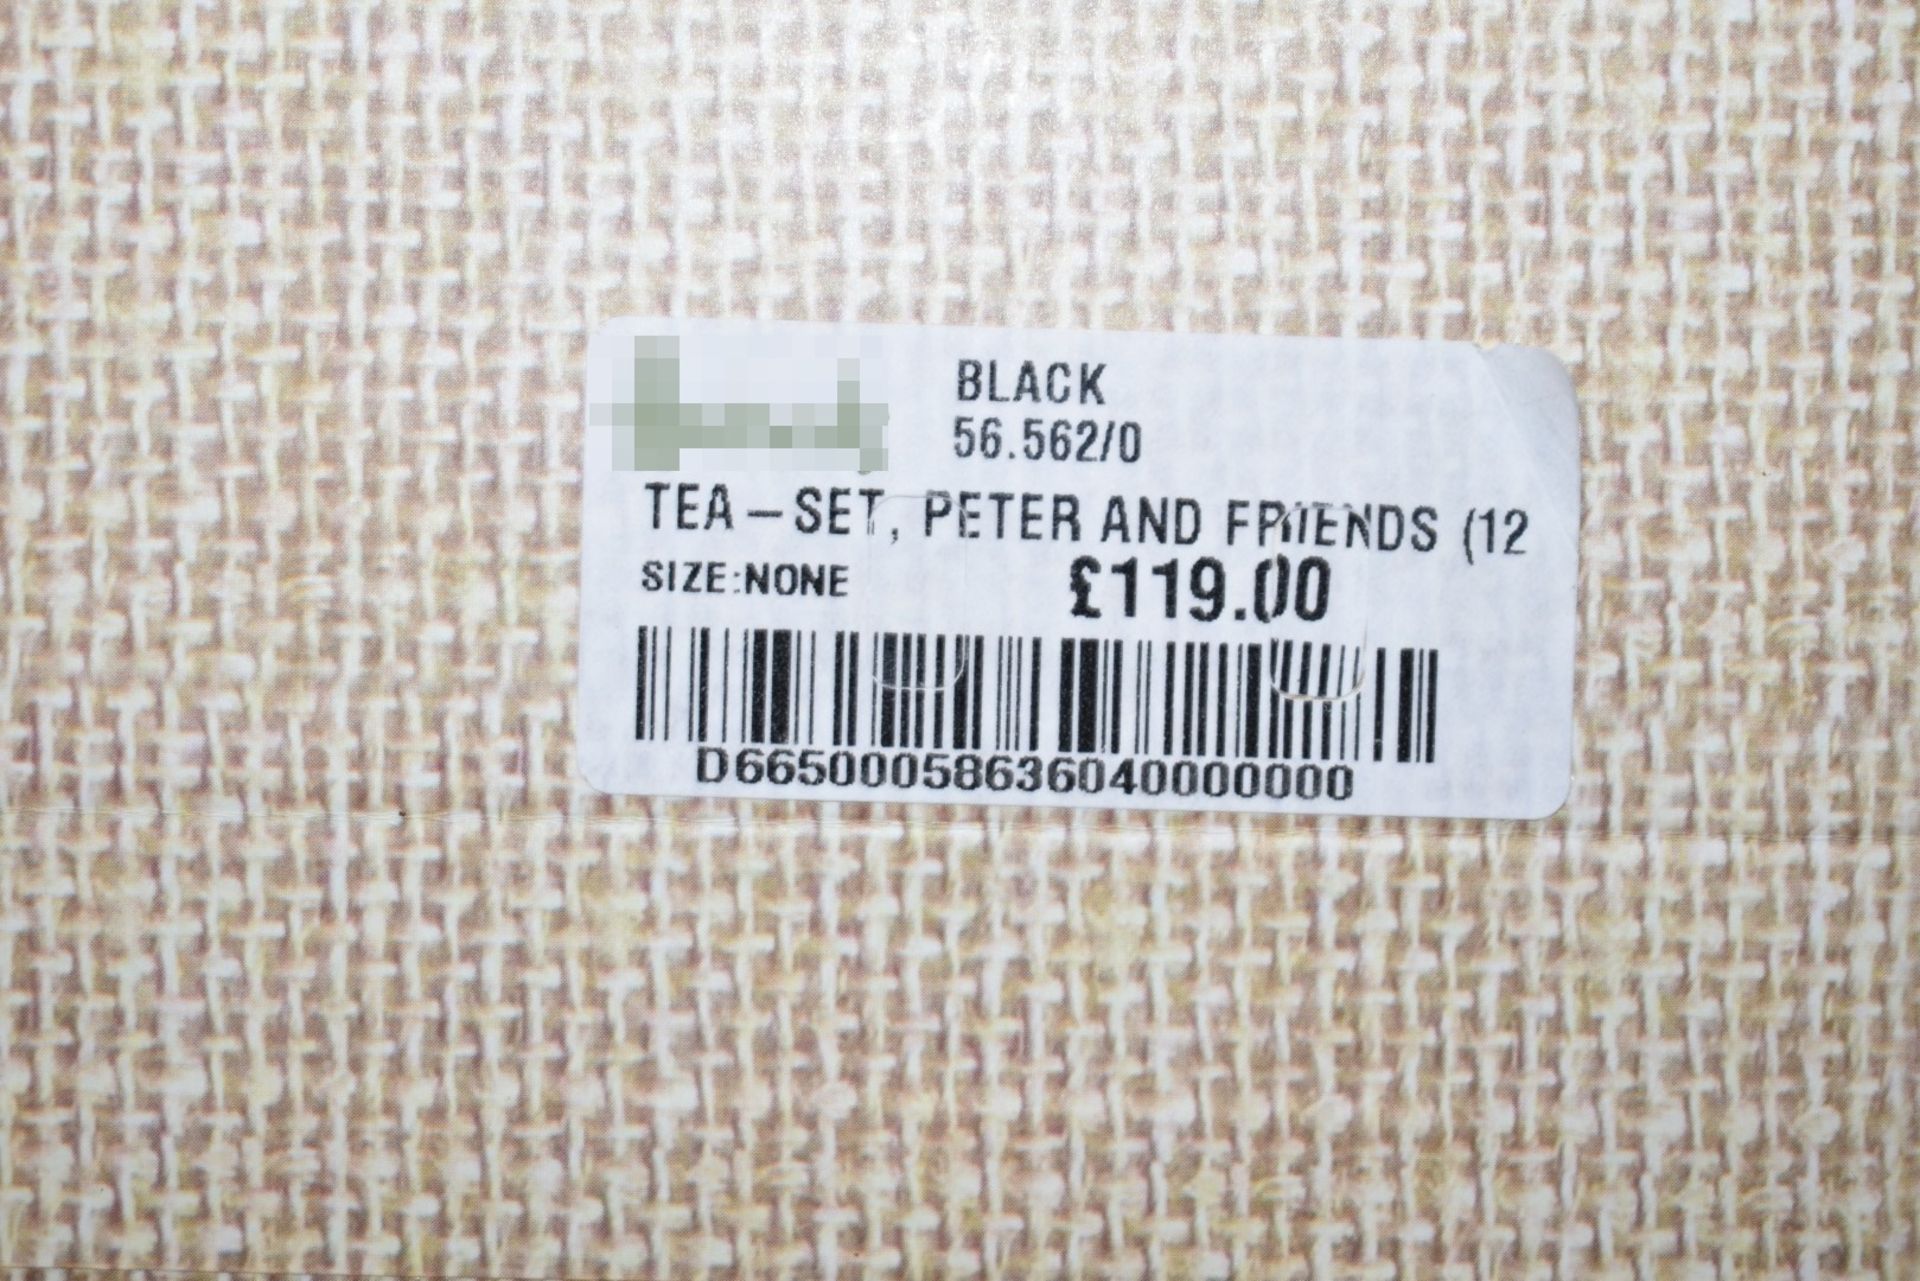 1 x Beatrix Potter Hand-gilded Porcelain Children's Tea Set In Case - Original Price £119.00 - - Image 5 of 6